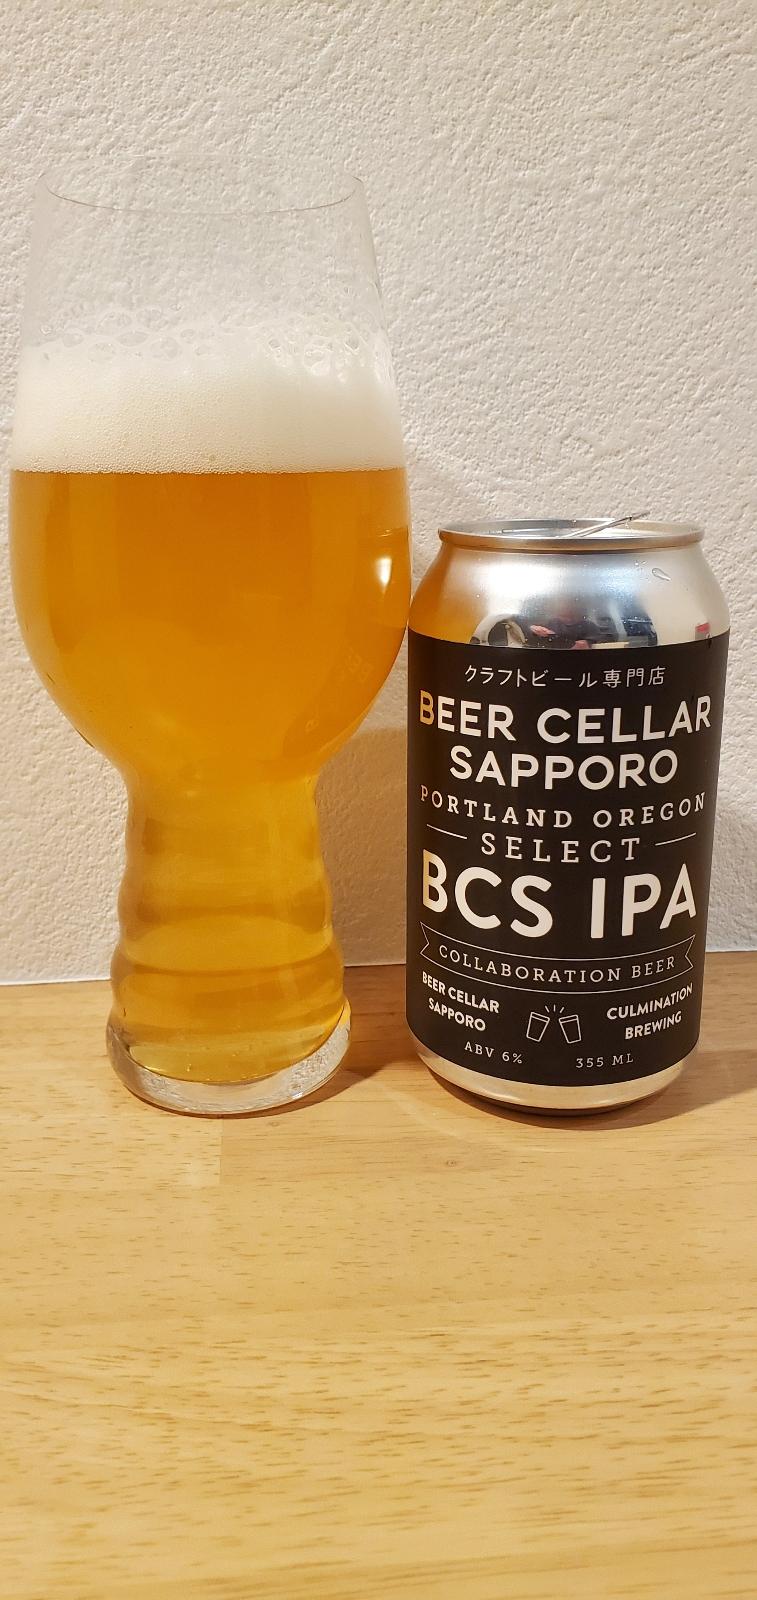 BCS IPA (Beer Cellar Sapporo)